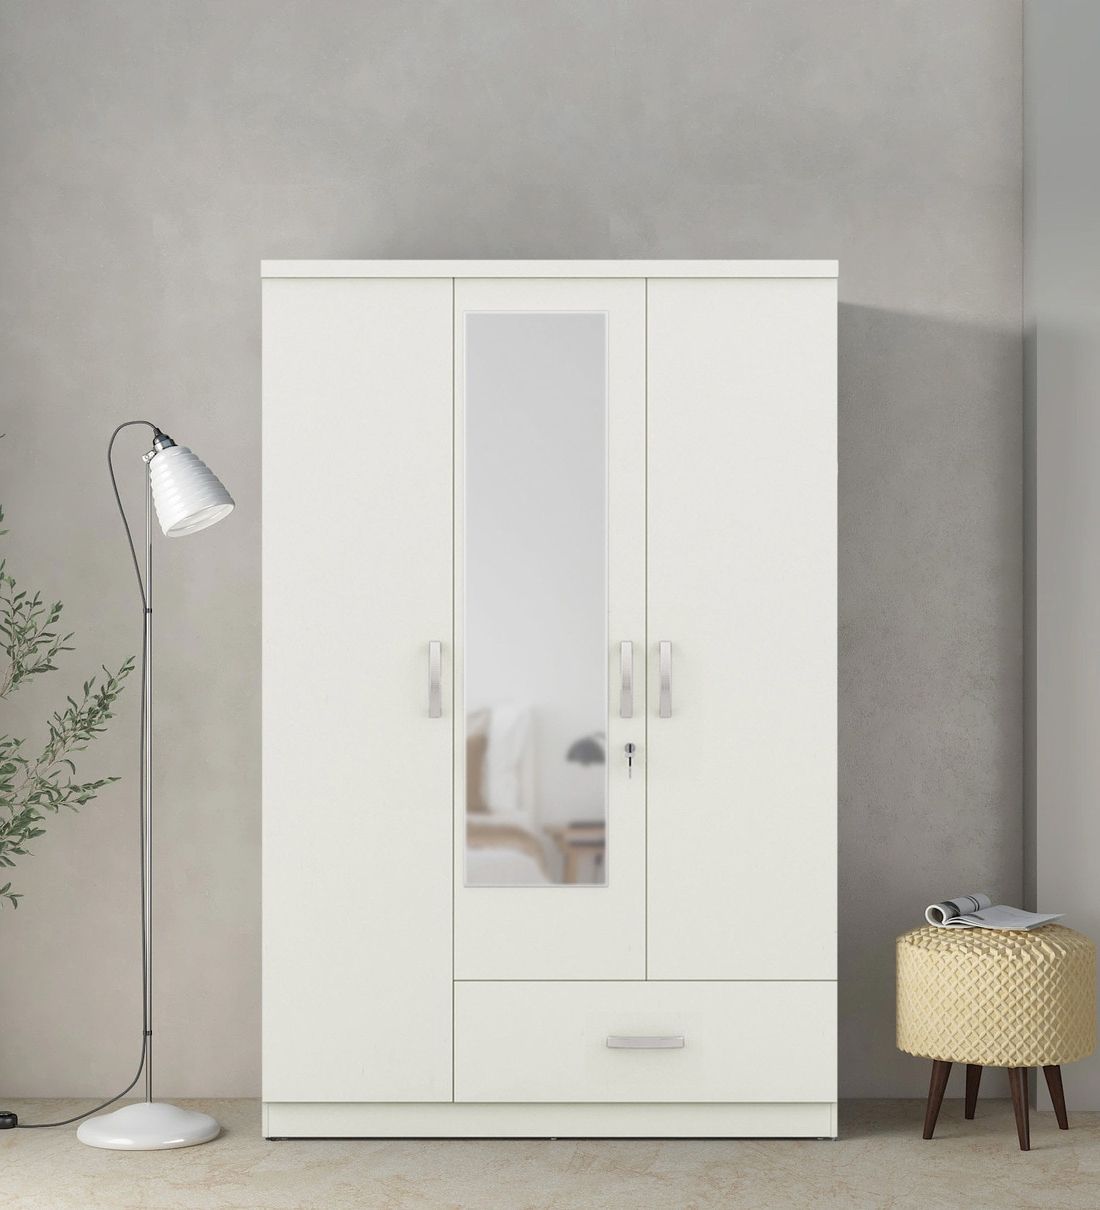 Buy Utsav 3 Door Wardrobe In White Finish With Mirror At 53% Off Hometown | Pepperfry Within White 3 Door Mirrored Wardrobes (View 15 of 20)